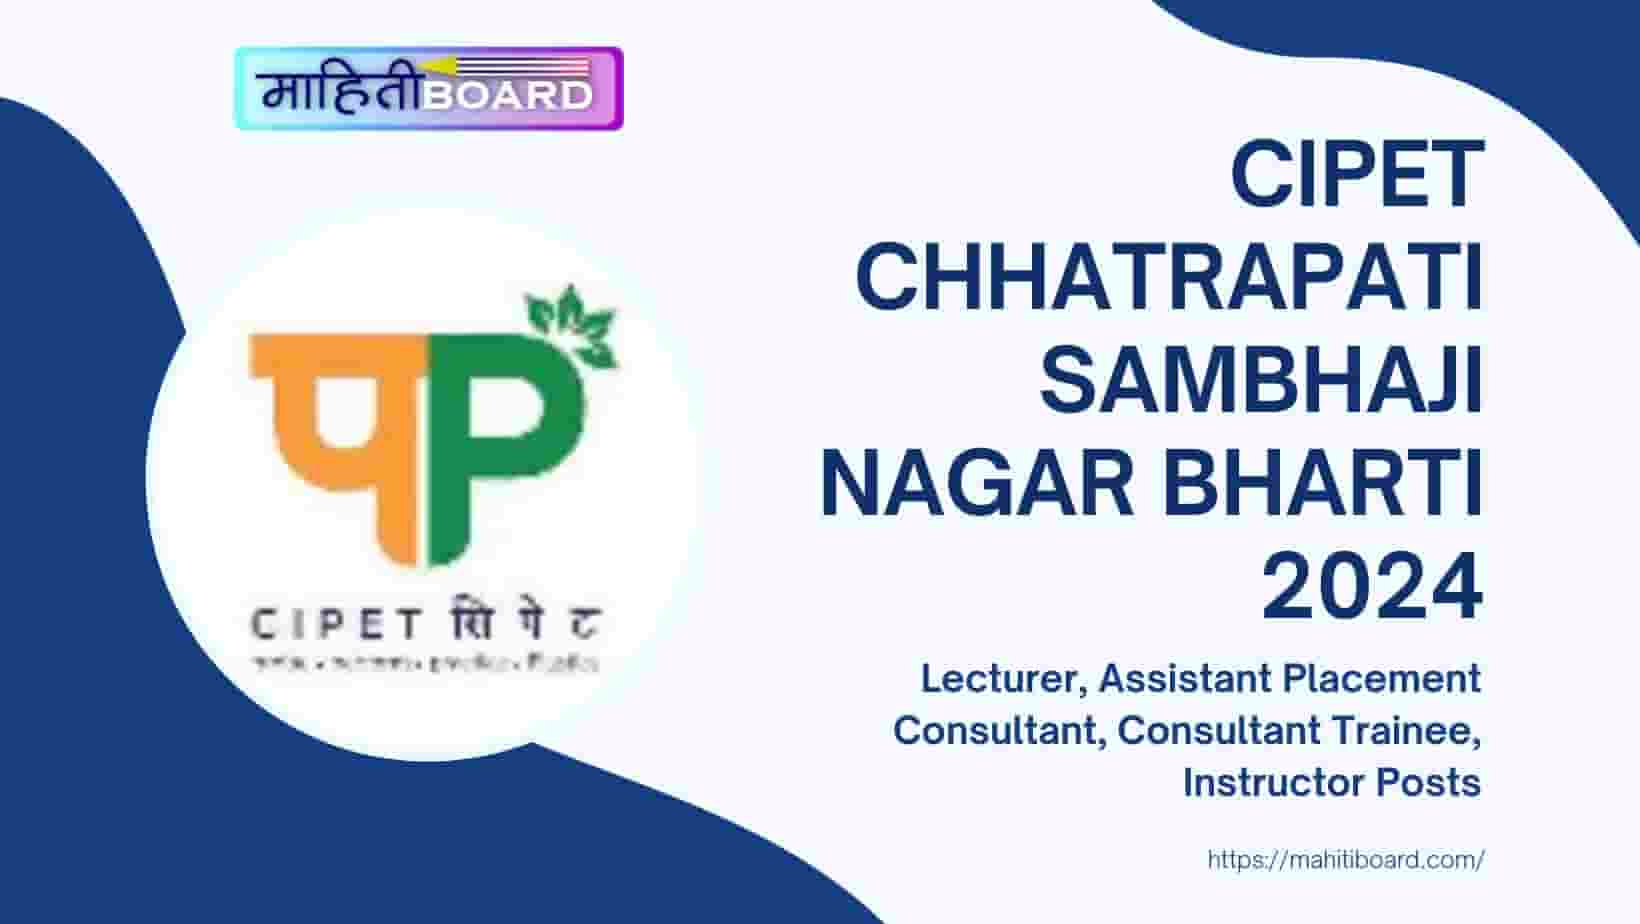 CIPET Chhatrapati Sambhaji Nagar Bharti 2024